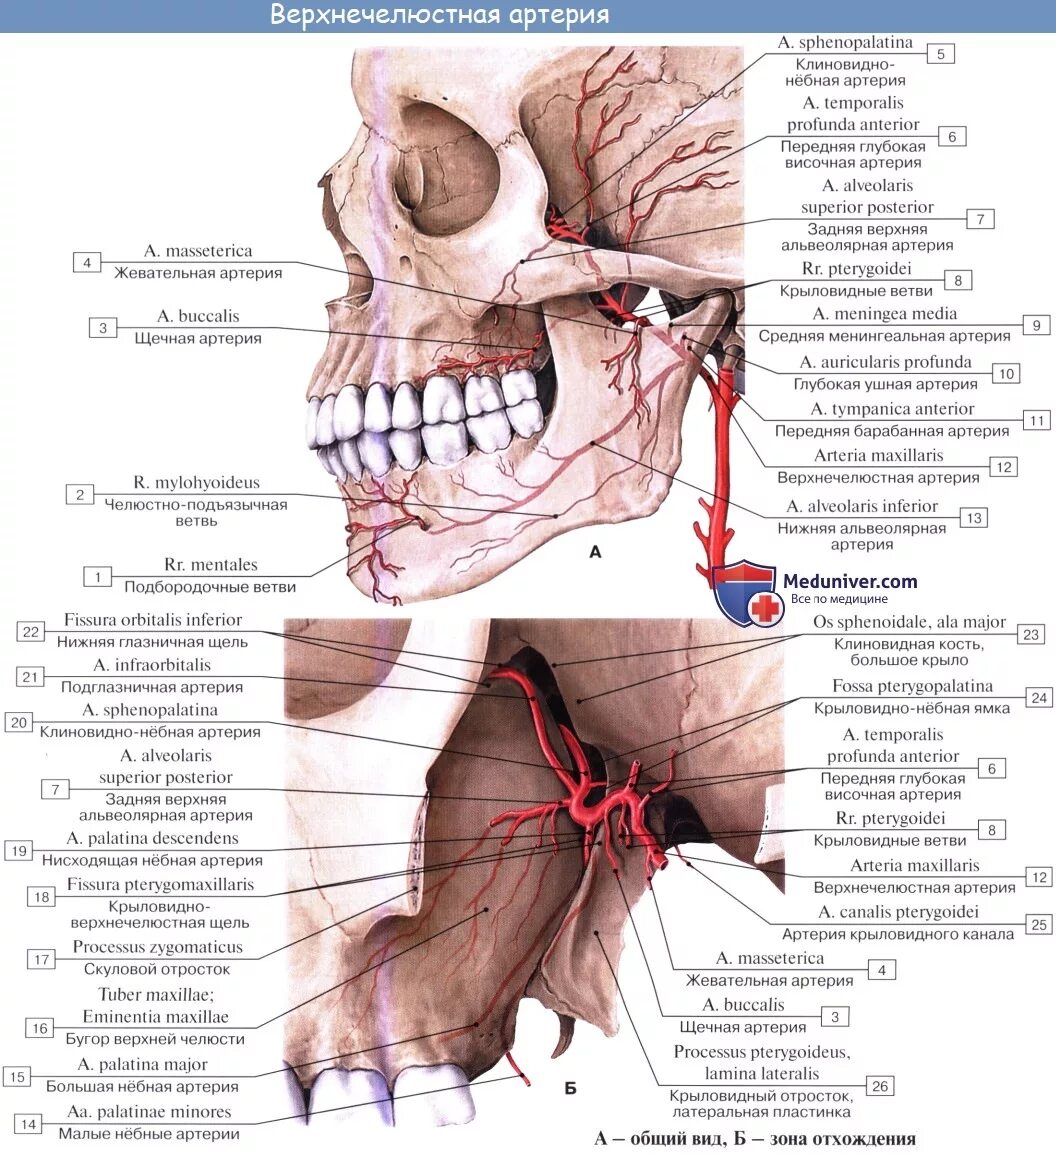 A maxillaris. Ветви верхнечелюстной артерии в крыловидном отделе. Нижнечелюстной отдел верхнечелюстной артерии. Arteria maxillaris ветви. Крылонебный отдел верхнечелюстной артерии.